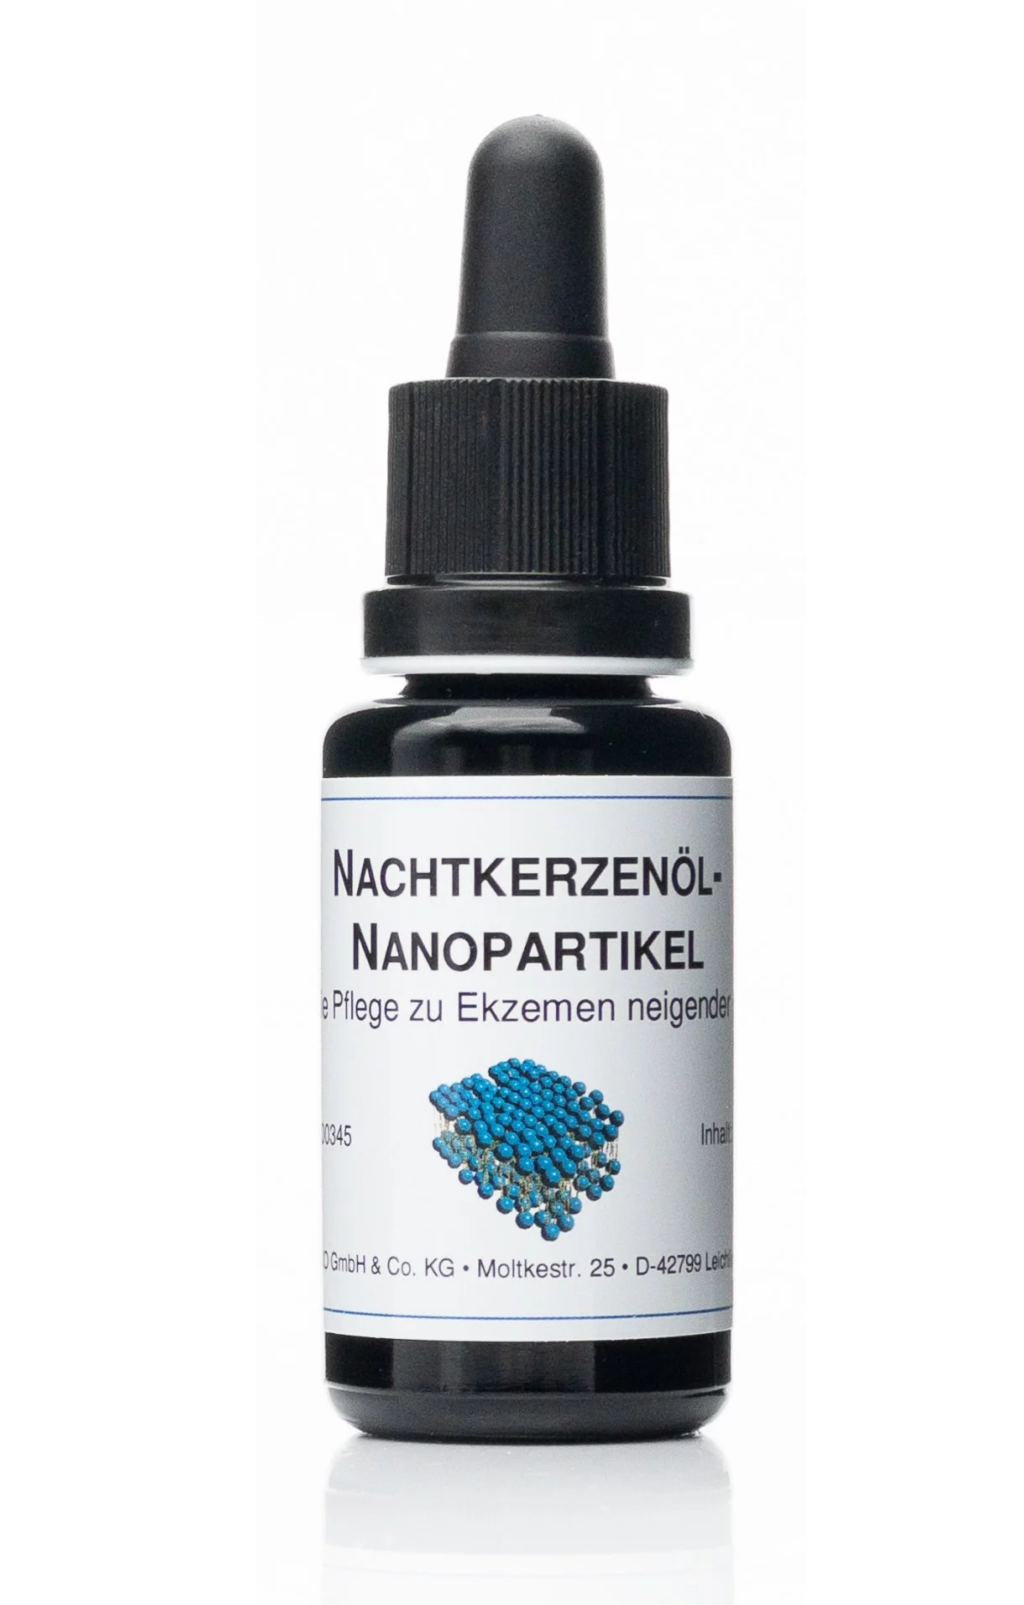 Nachtkerzenöl-Nanopartikel 